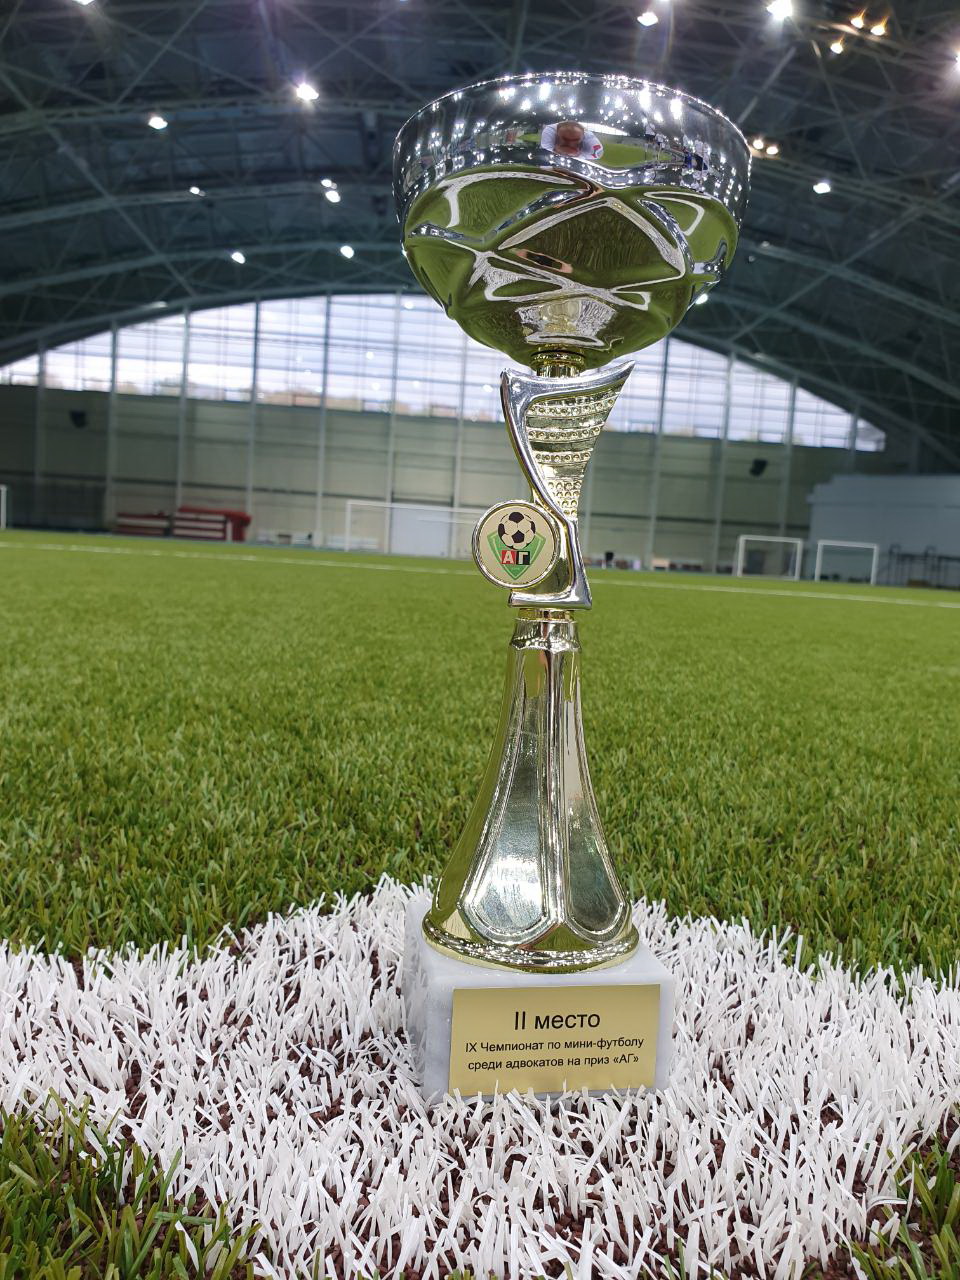 Второе место заняла команда БРКА на IX Всероссийском чемпионате по мини-футболу среди адвокатов